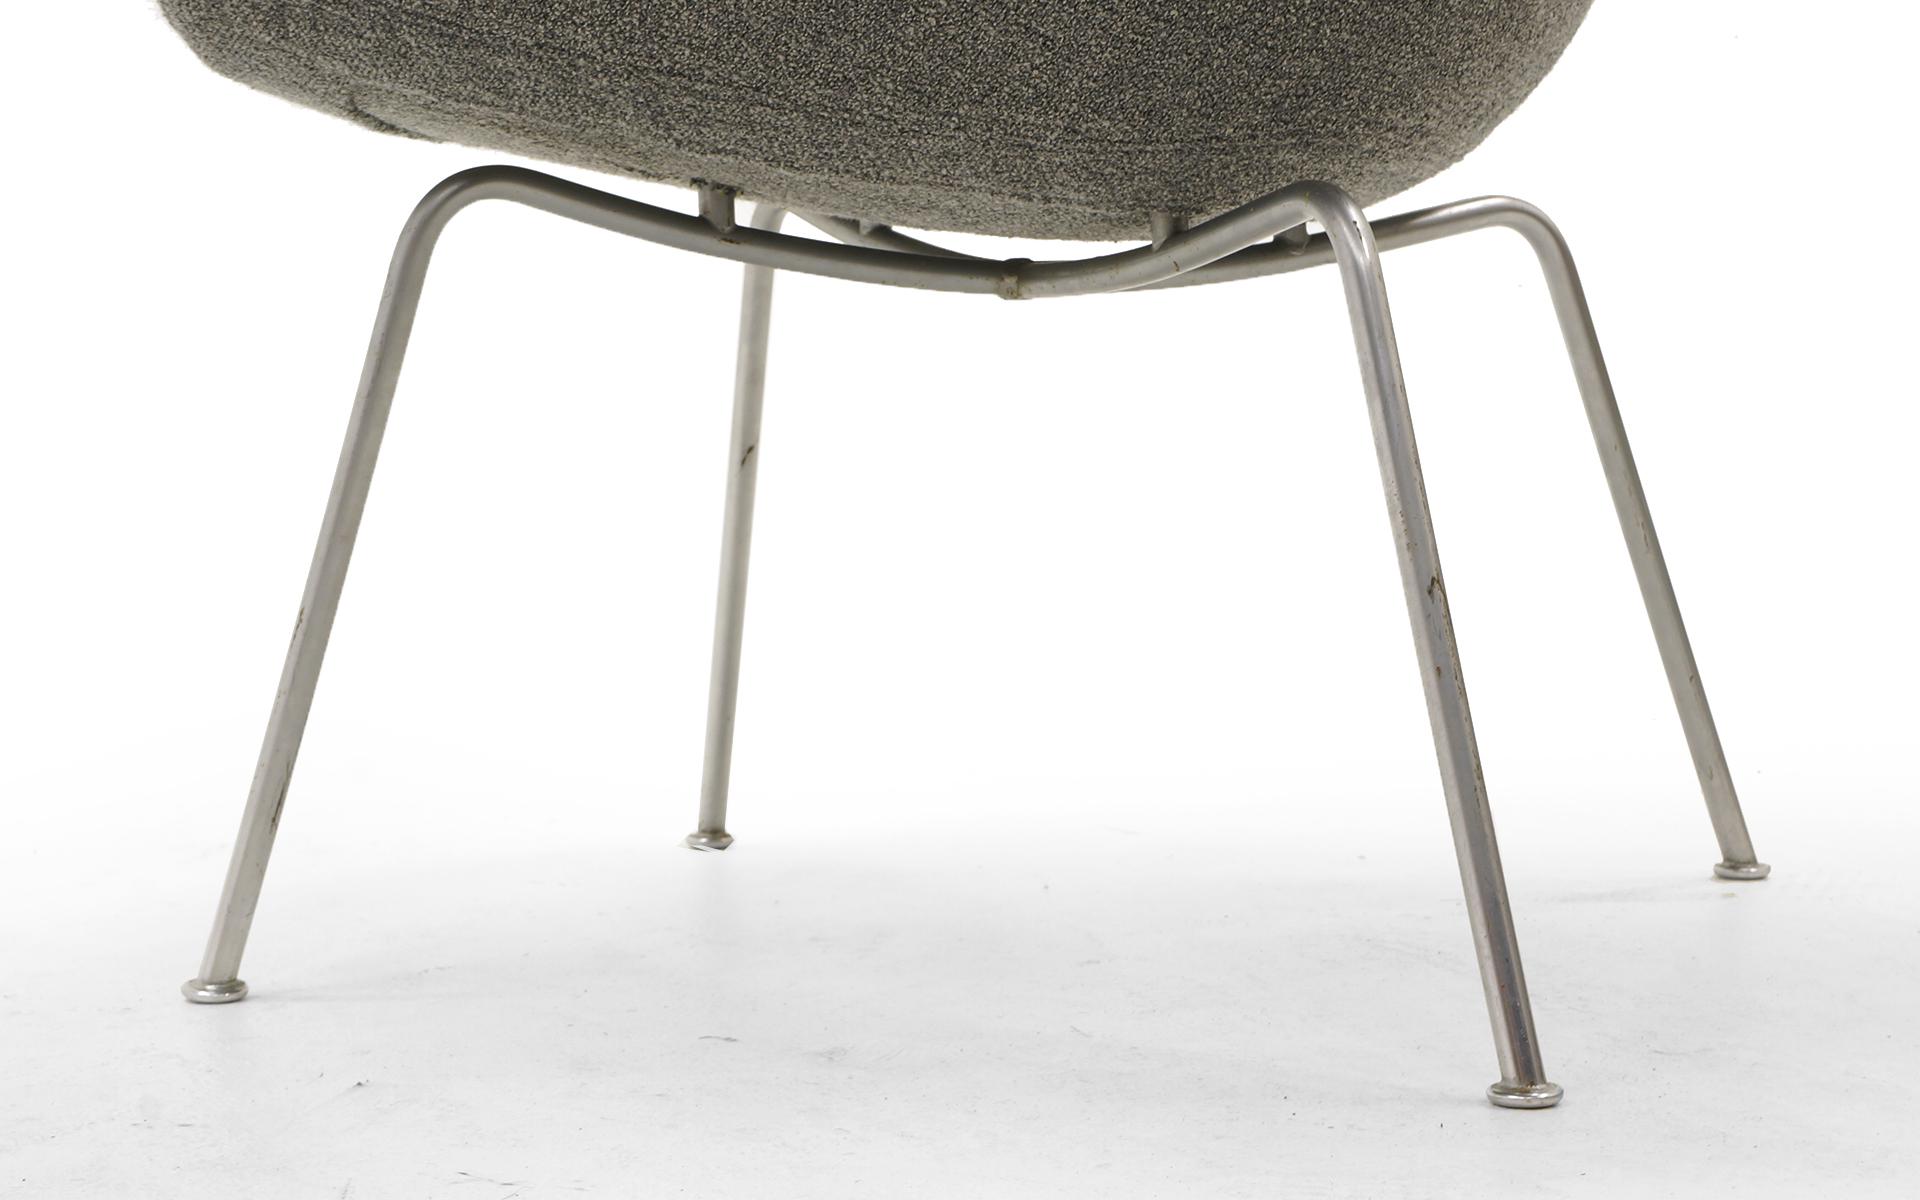 Steel Pair of Pot Chairs by Arne Jacobsen for Fritz Hansen, Restored, Maharam Fabric